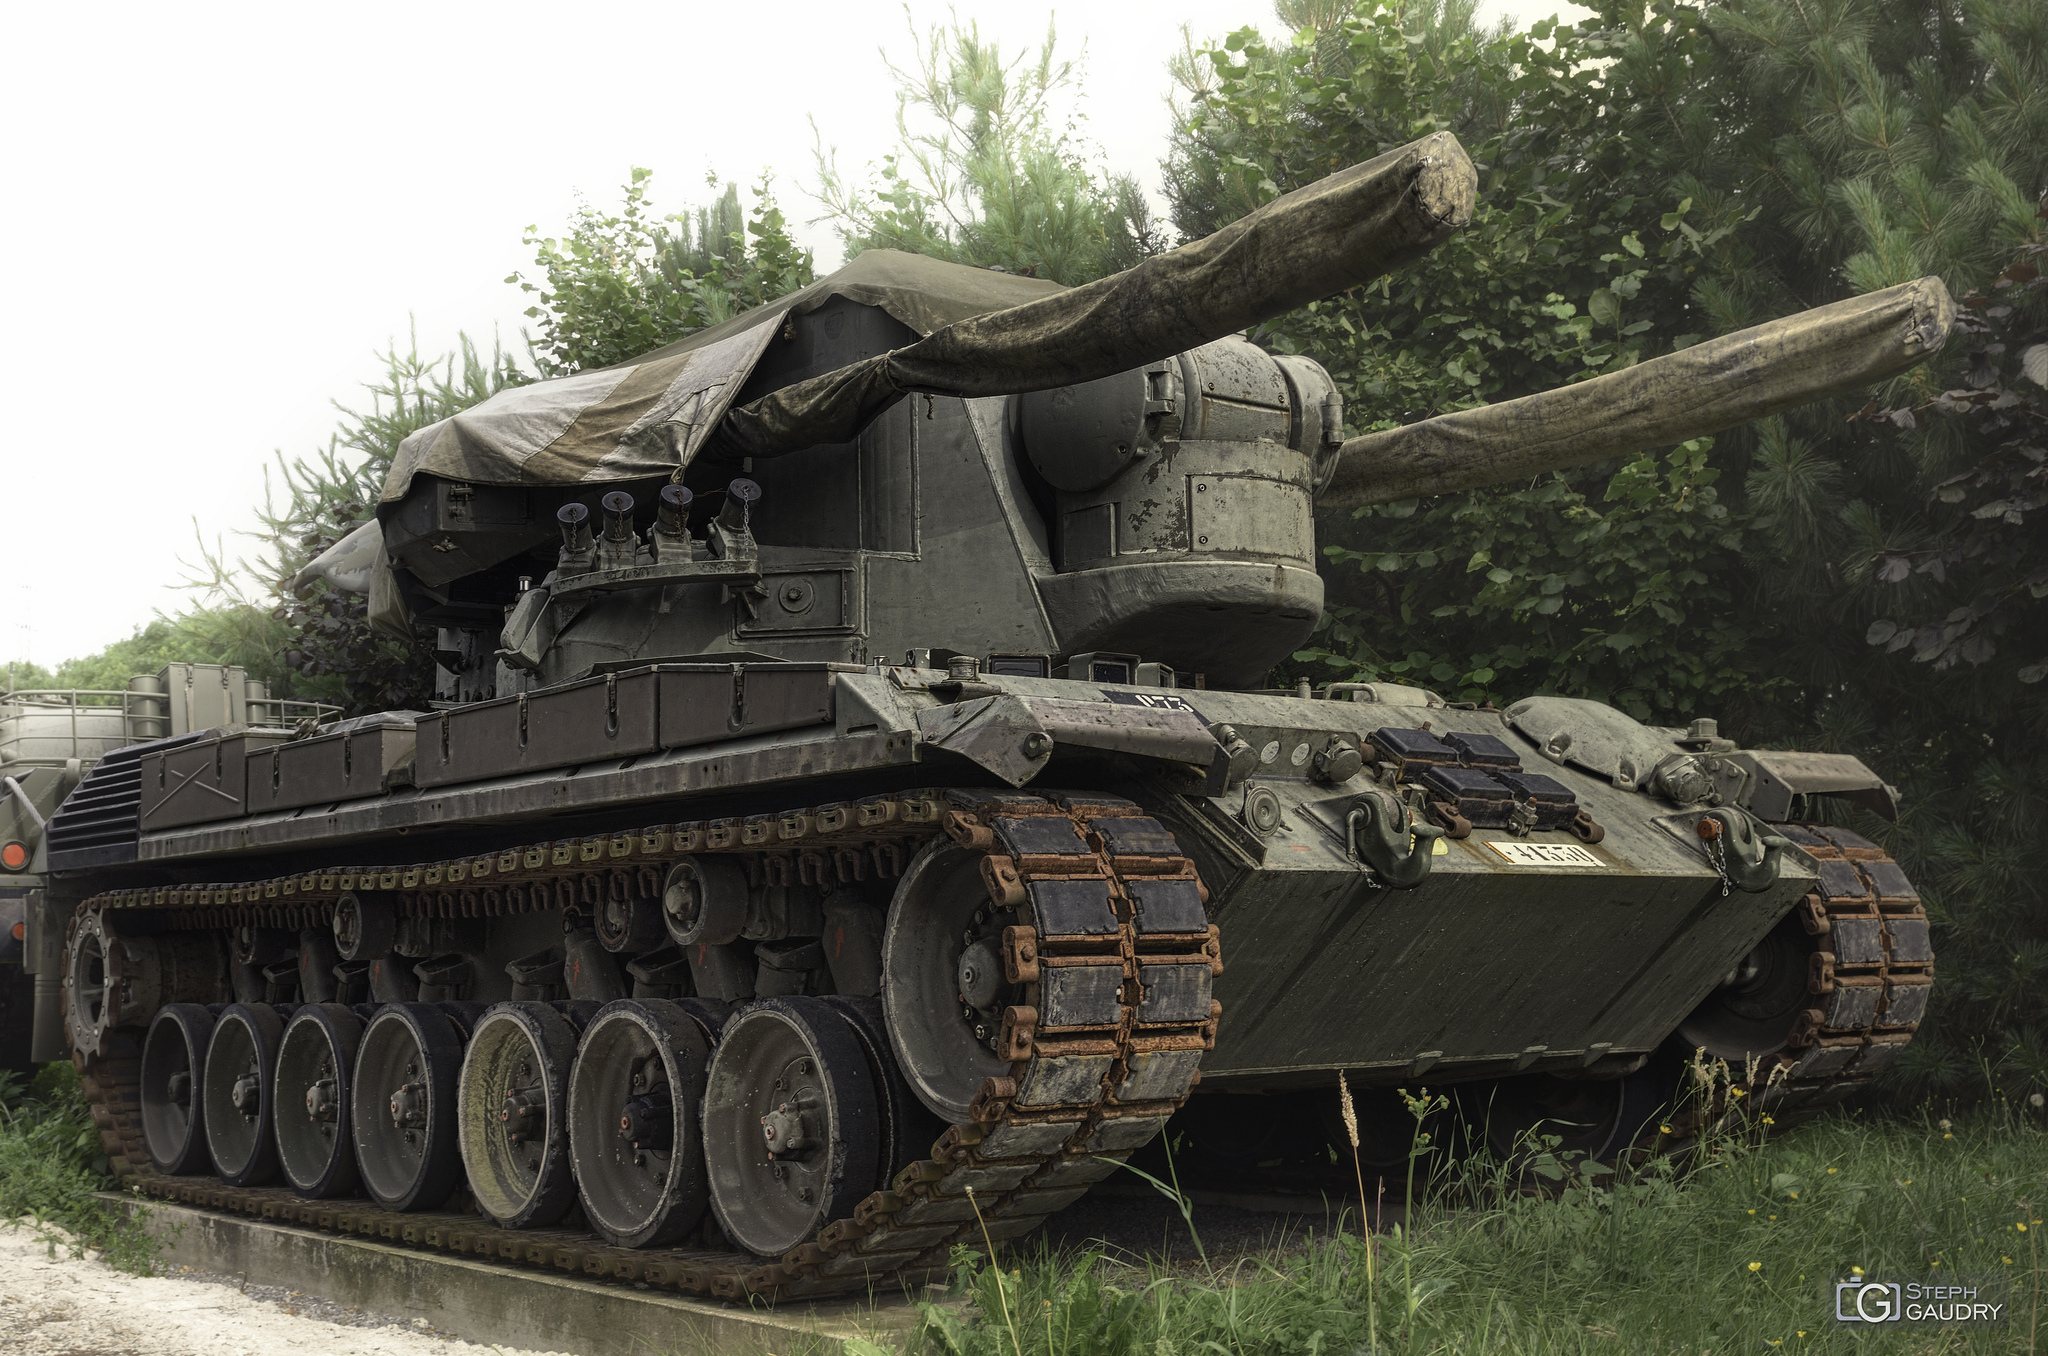 Flakpanzer Gepard [Click to start slideshow]